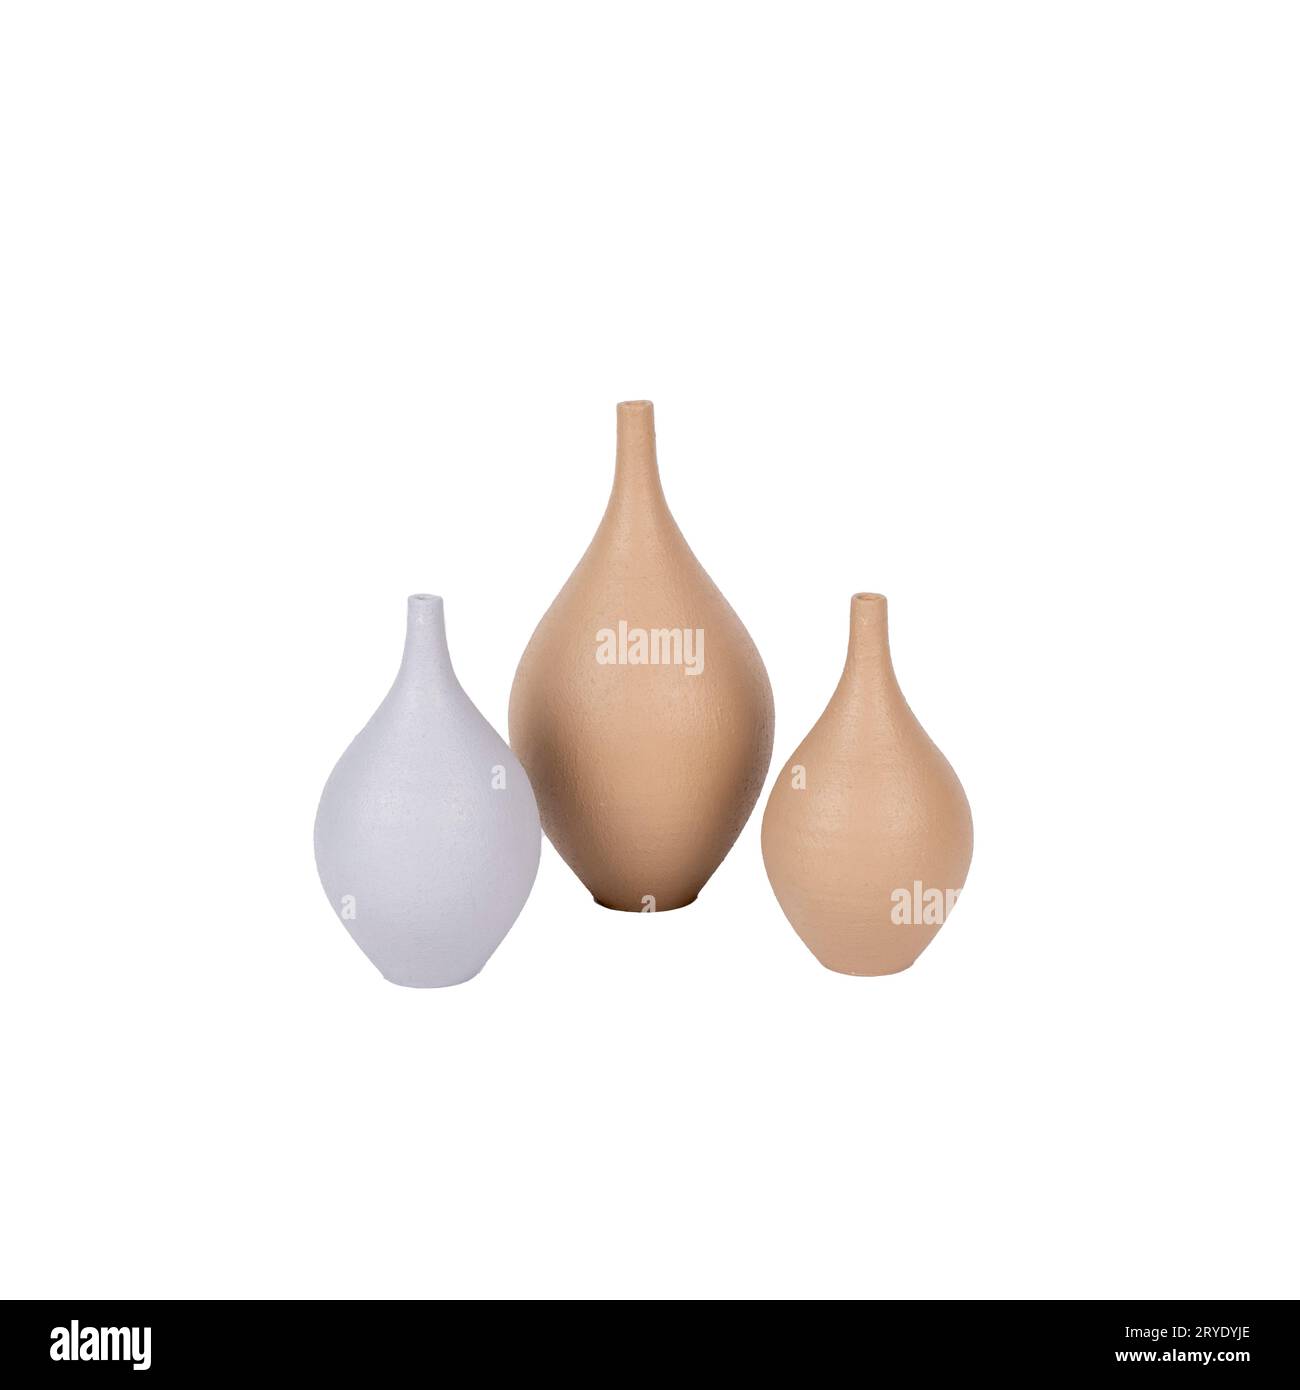 Amphora vase form Cut Out Stock Images & Pictures - Alamy